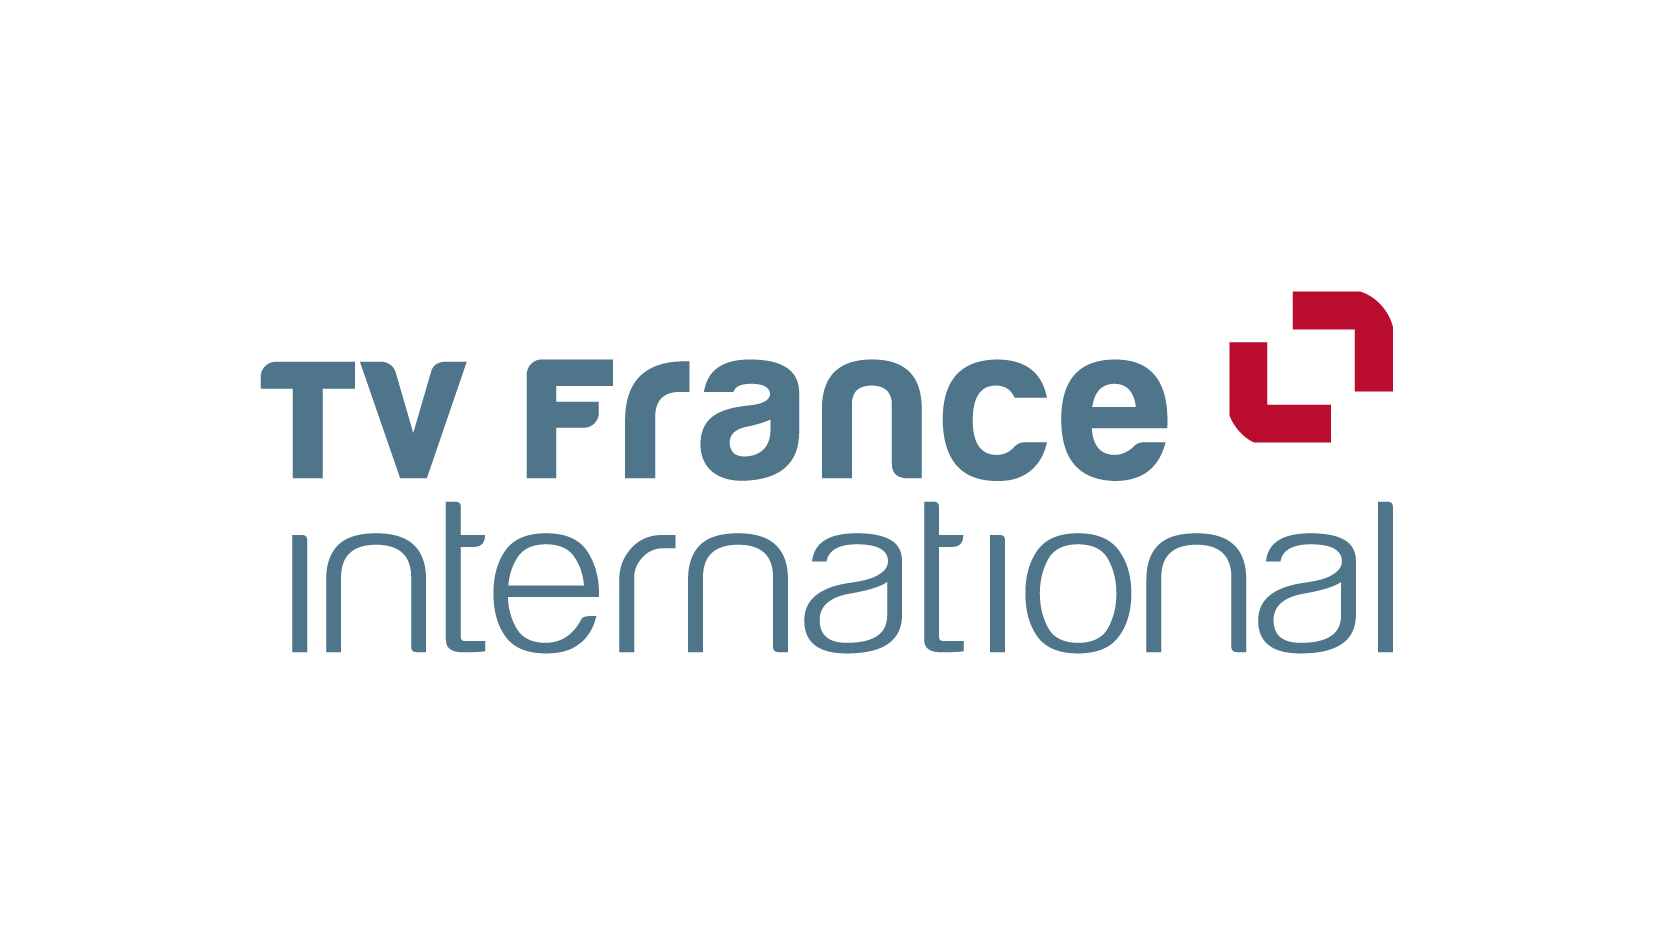 TV France International